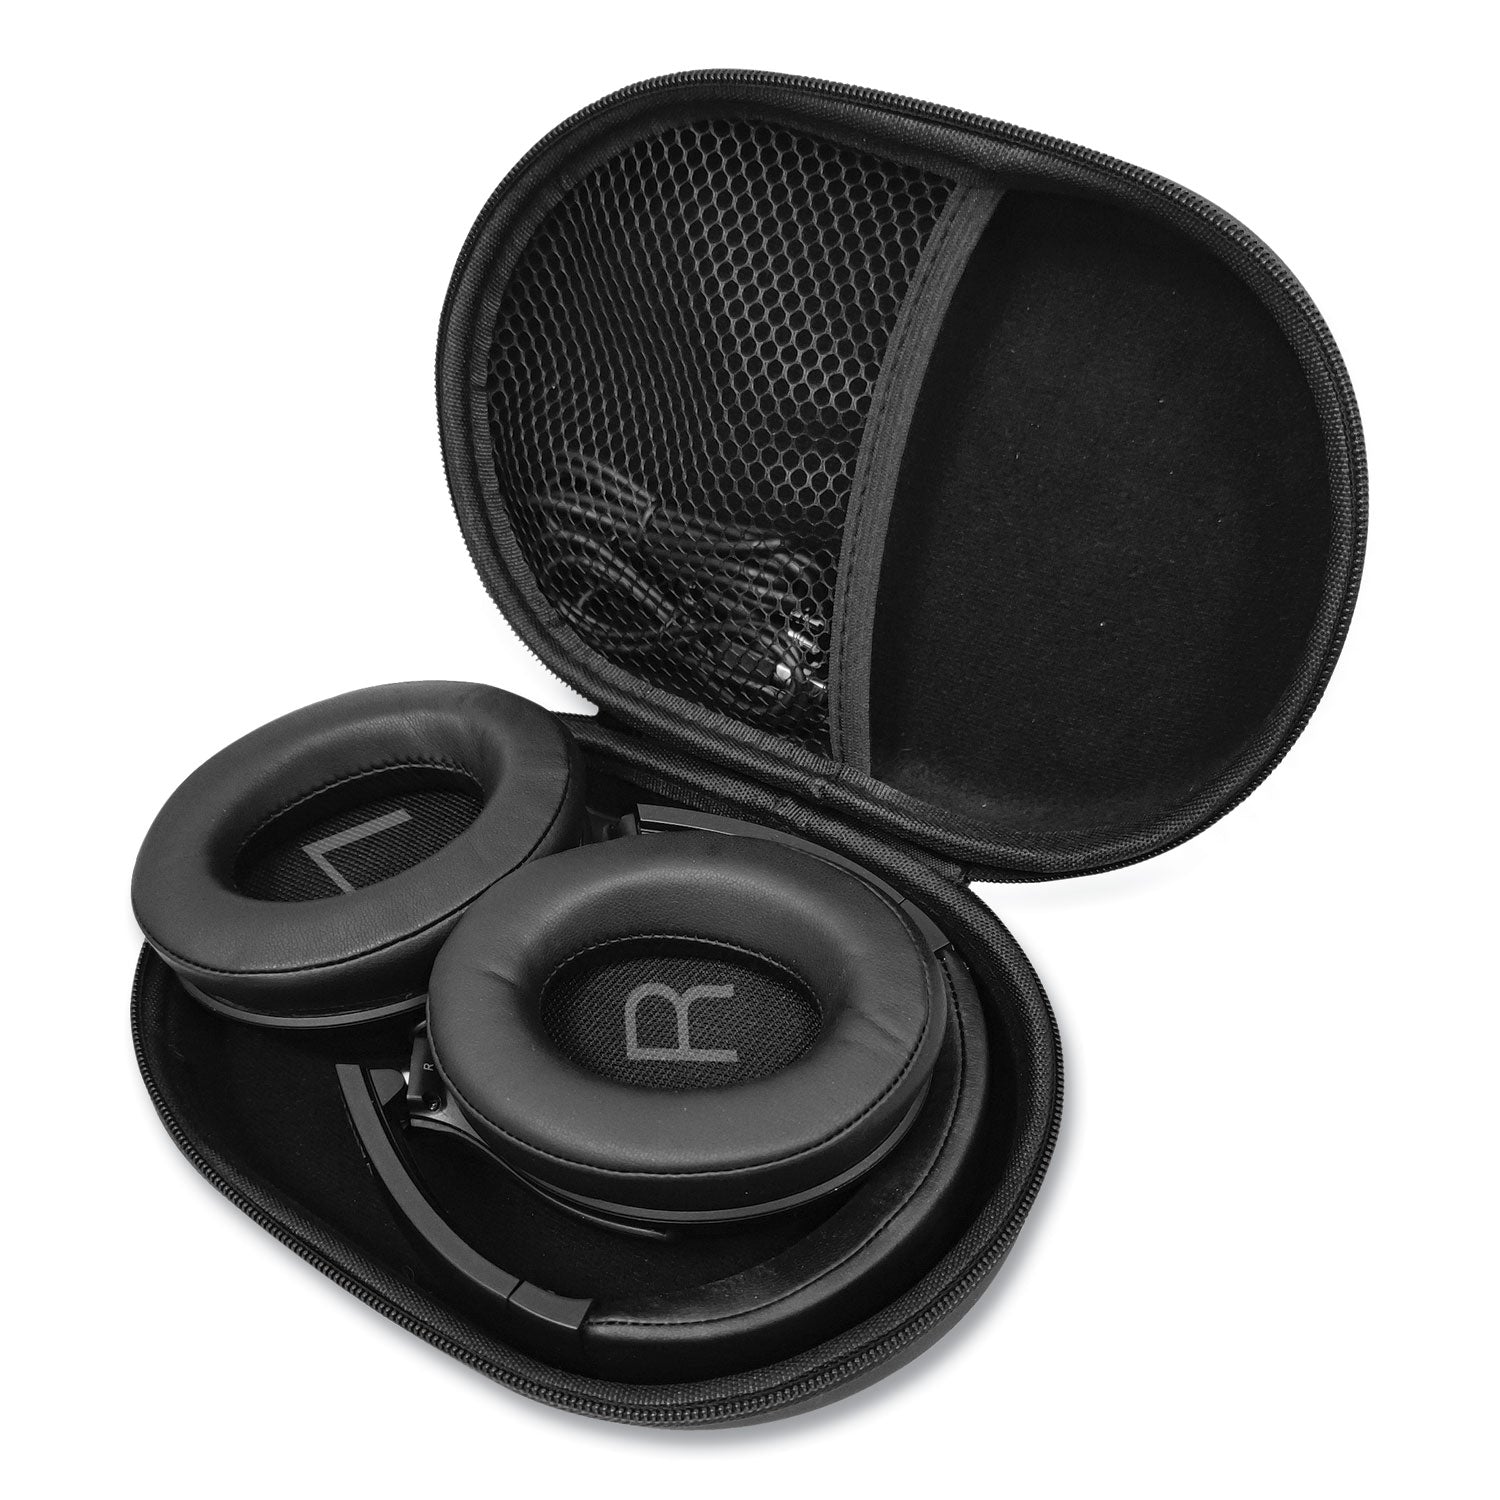 krave-360-anc-wireless-noise-cancelling-headphones_mhshp9350b - 3